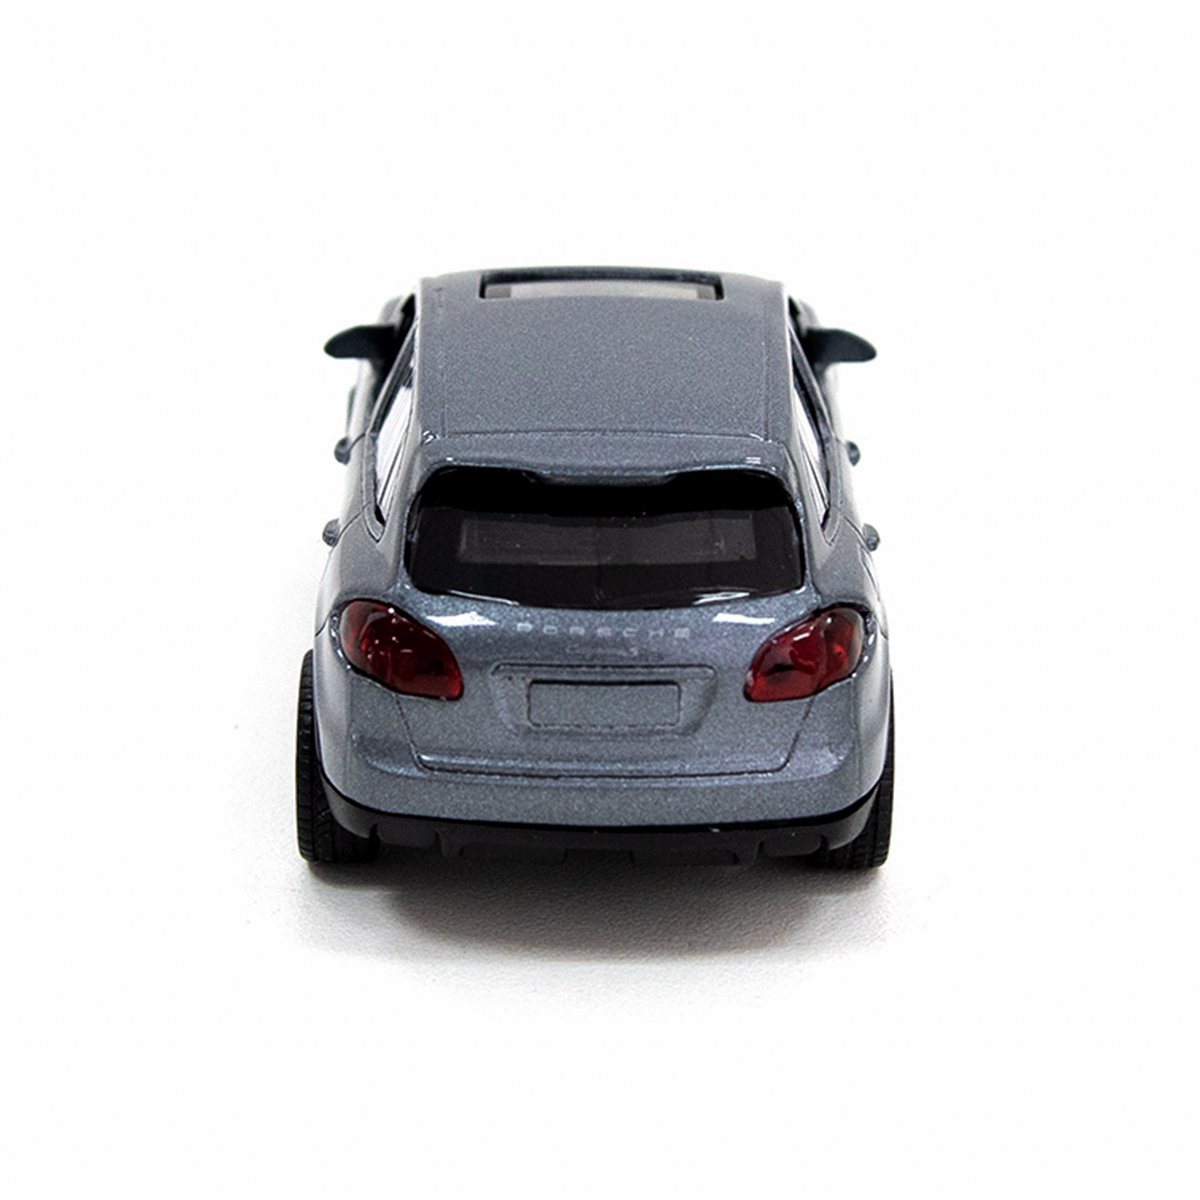 Автомодель TechnoDrive Porsche Cayenne S серебристая серая (250250) - фото 4